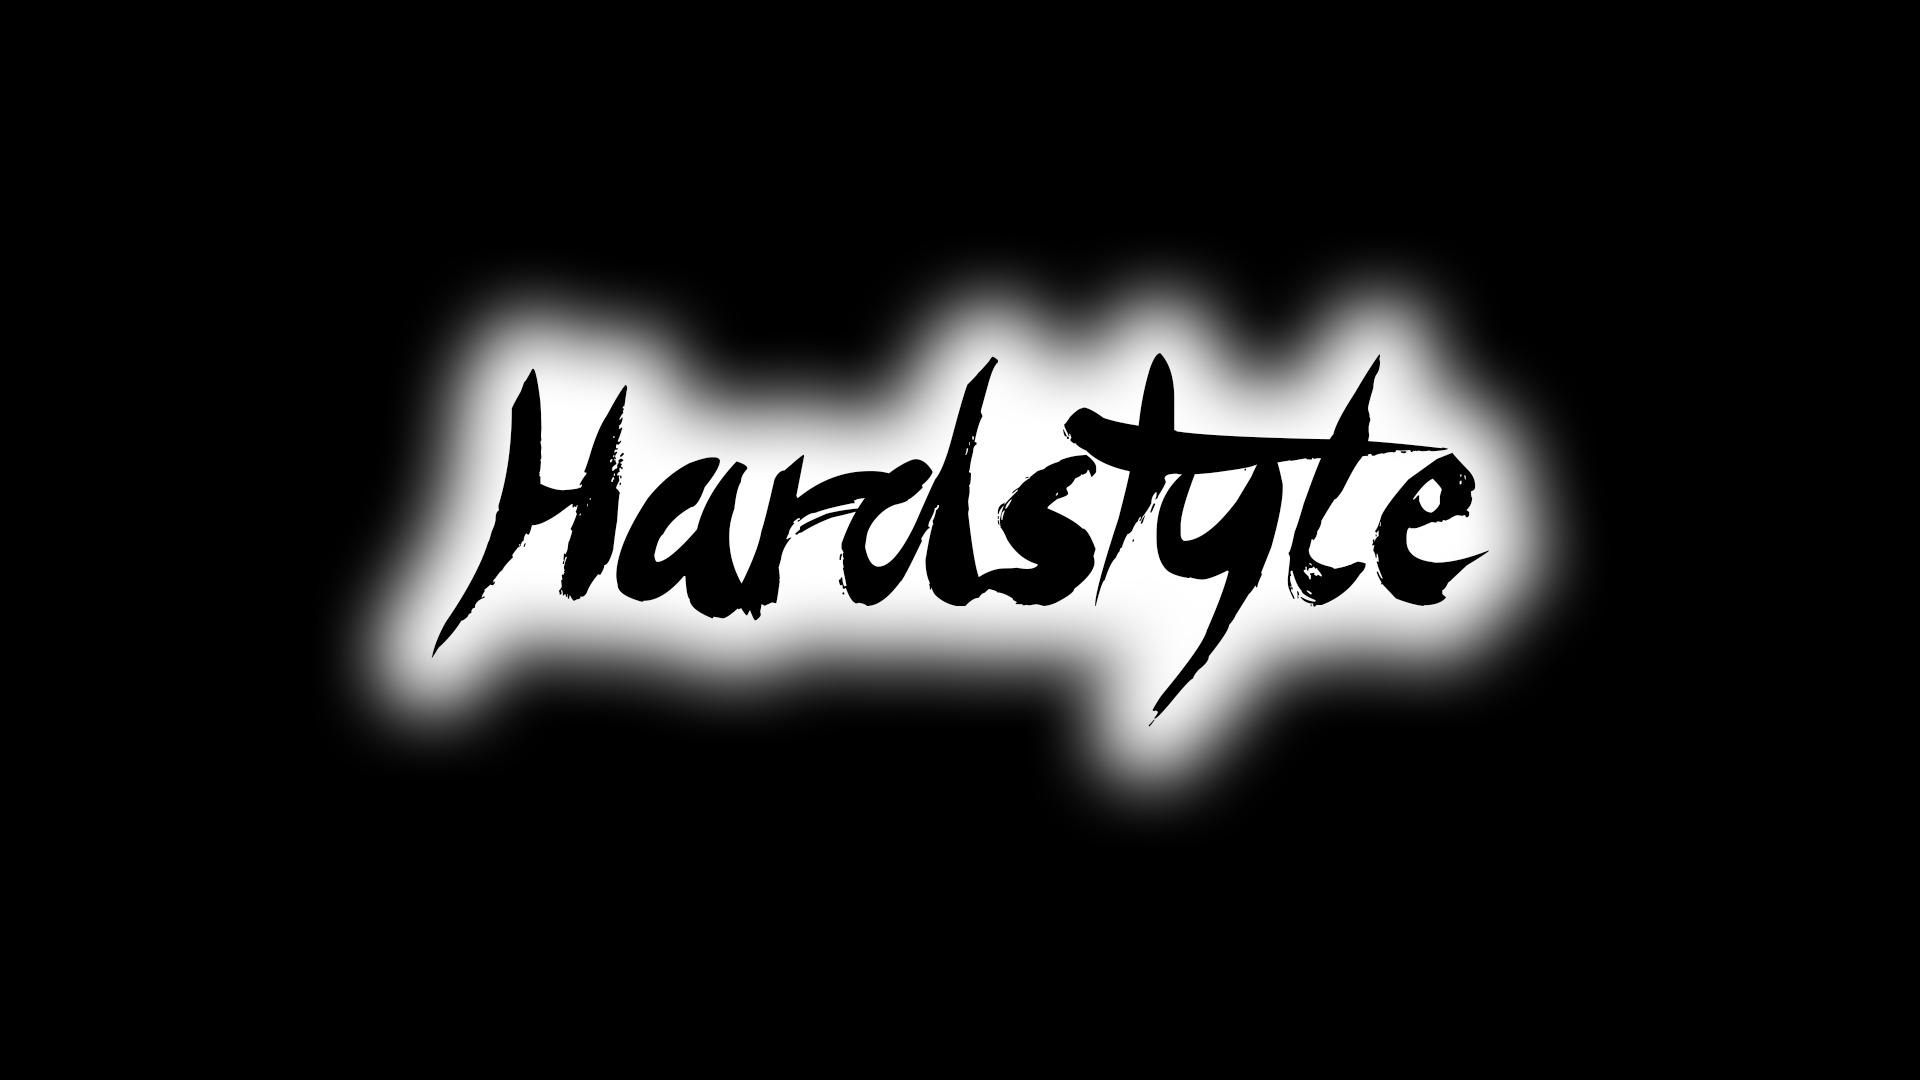 Hardstyle Dubstep 1920x1080